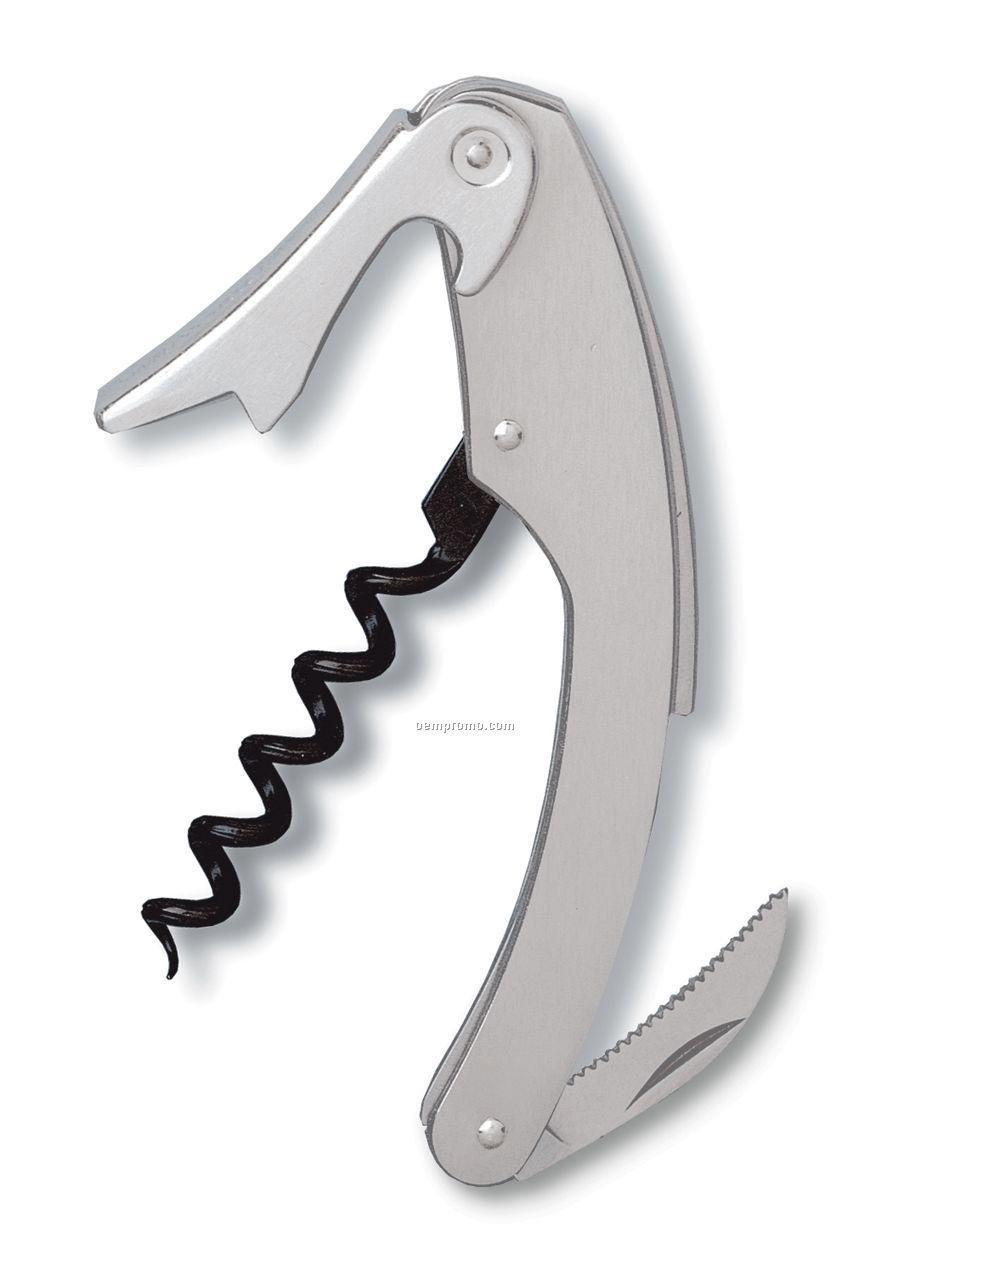 Mezzaluna Waiter's Stainless Steel Curved Corkscrew- Laser Engraved